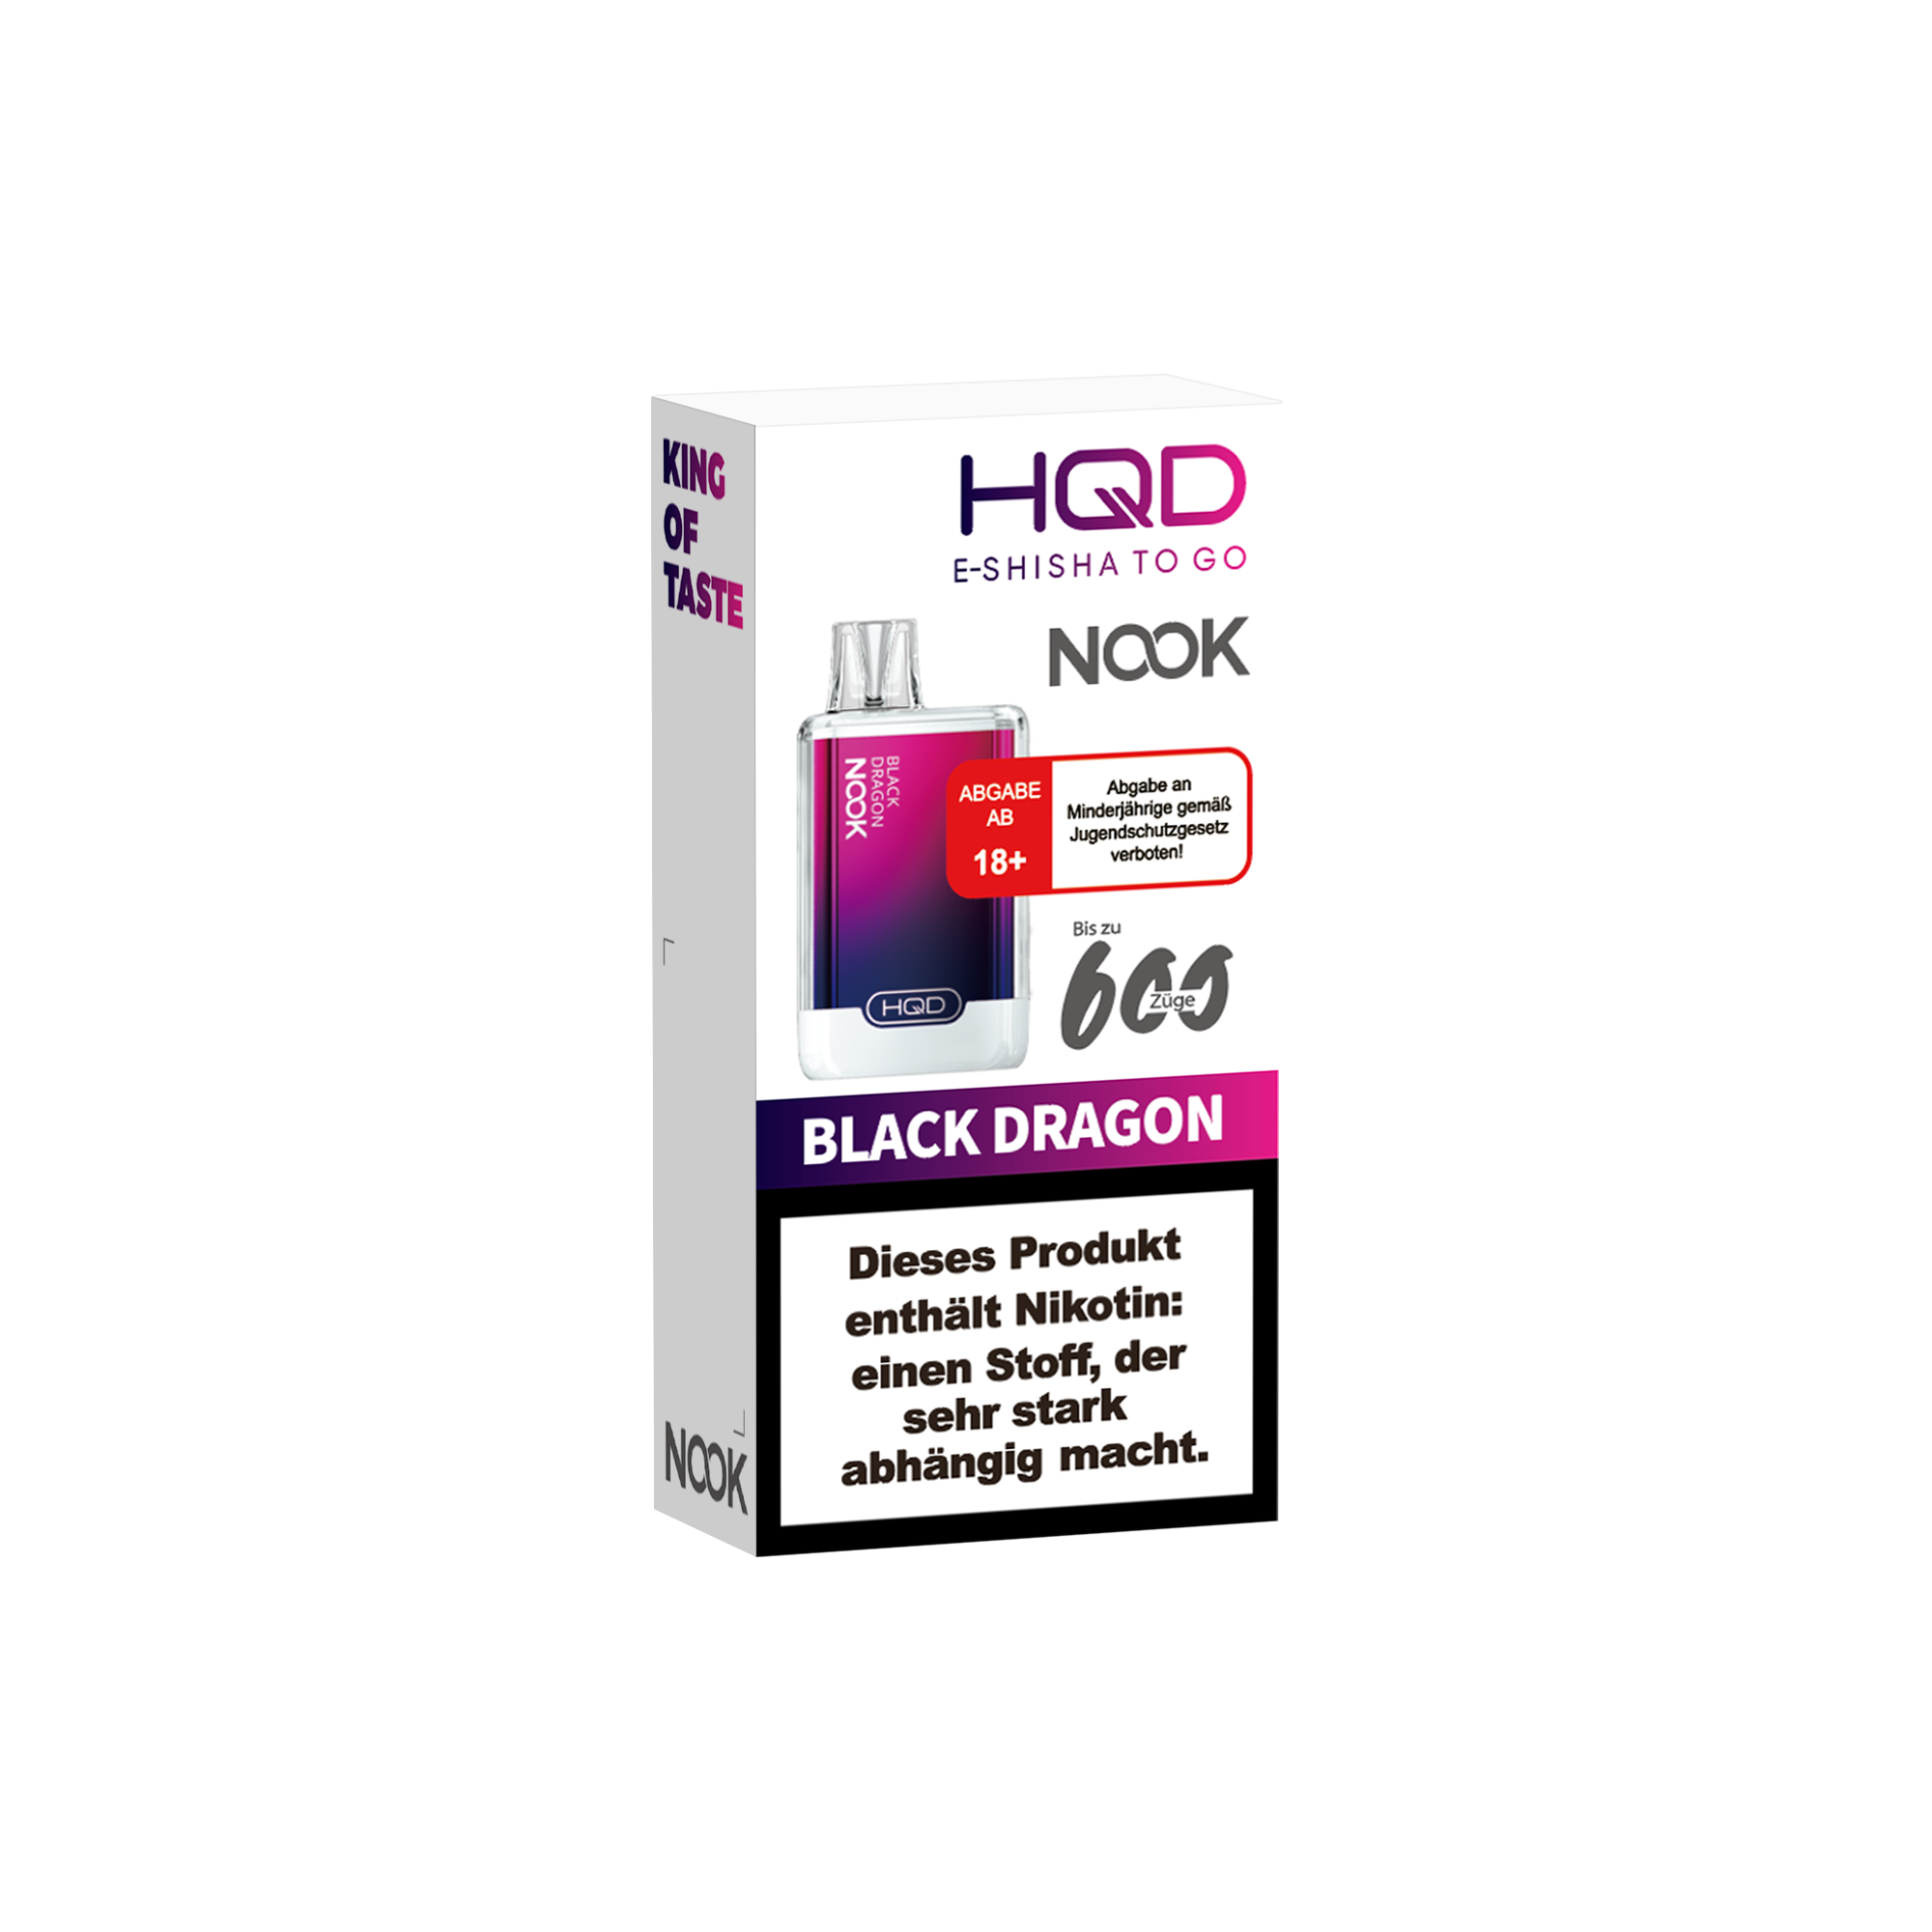 E-Zigarette HQD Nook BLACK DRAGON 18mg Nikotin 600